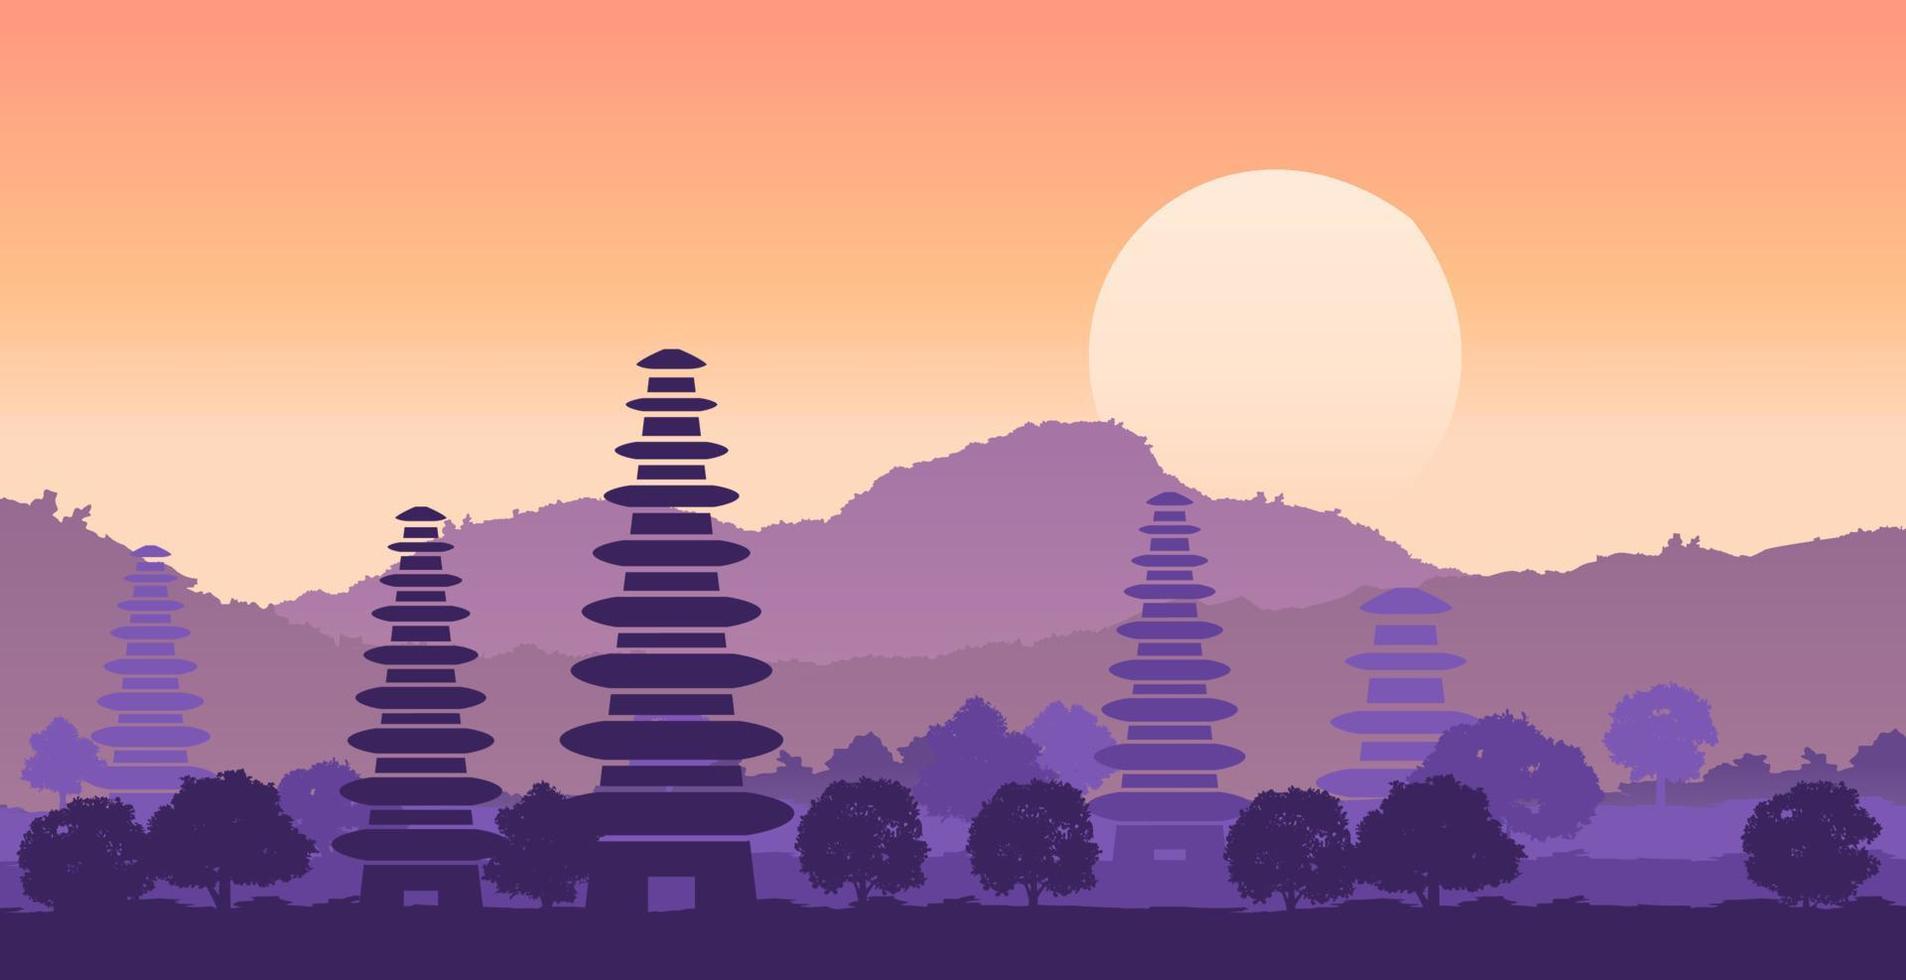 Pura ulan danu famous pagoda of Indonesia in bali island in silhouette design vector